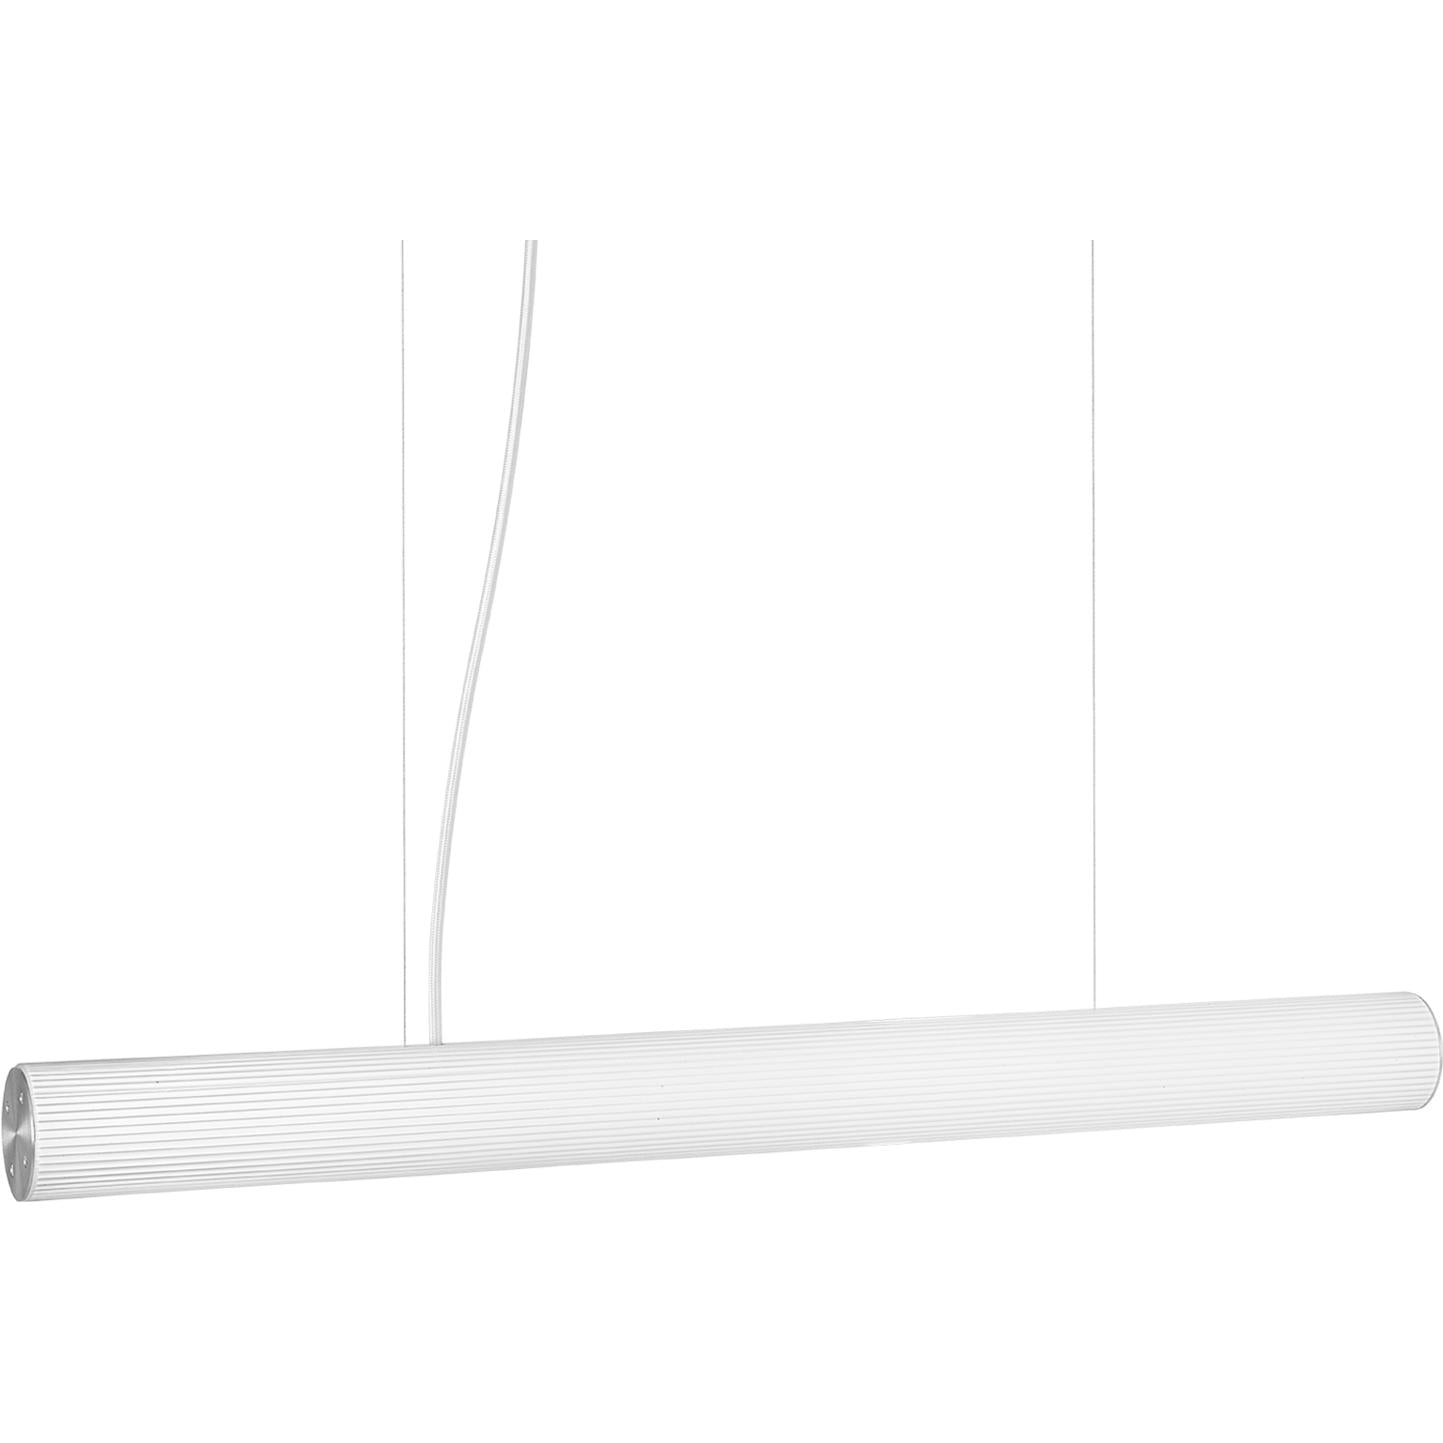 Ferm Living Vuelta Suspension Lampe en acier inoxydable Ø100 cm, blanc